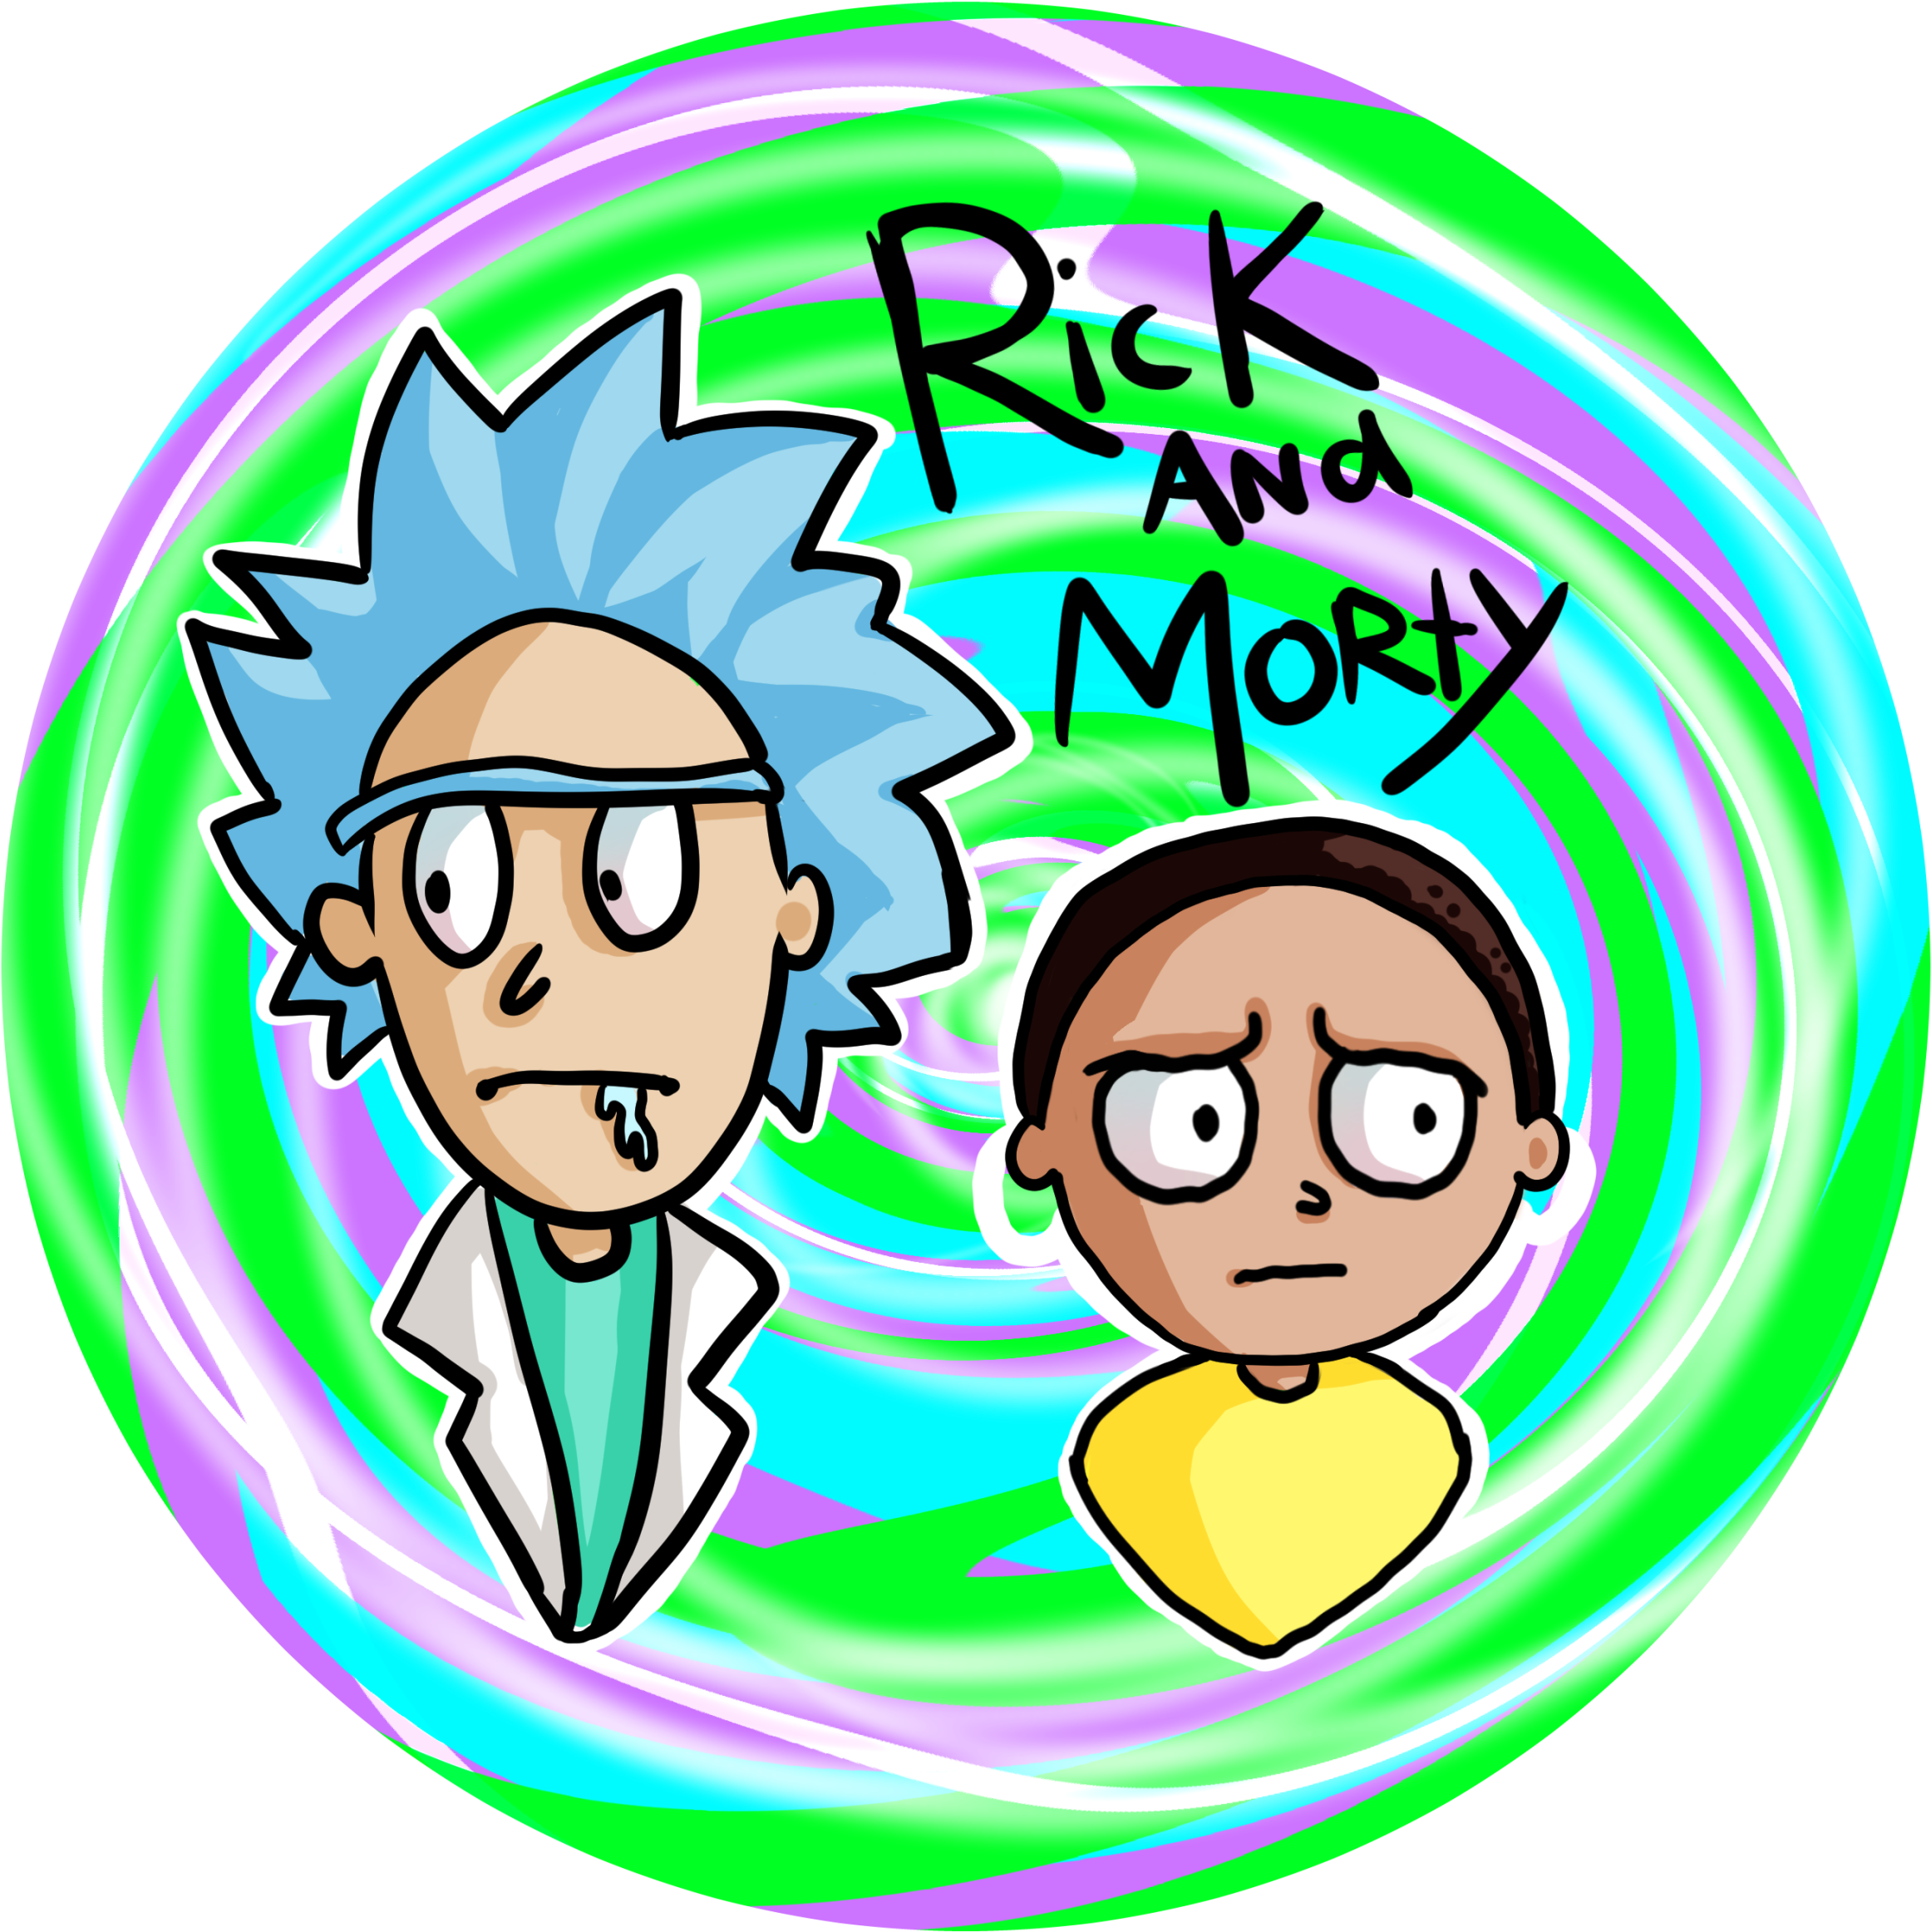 Rick And Morty (3139x2560)